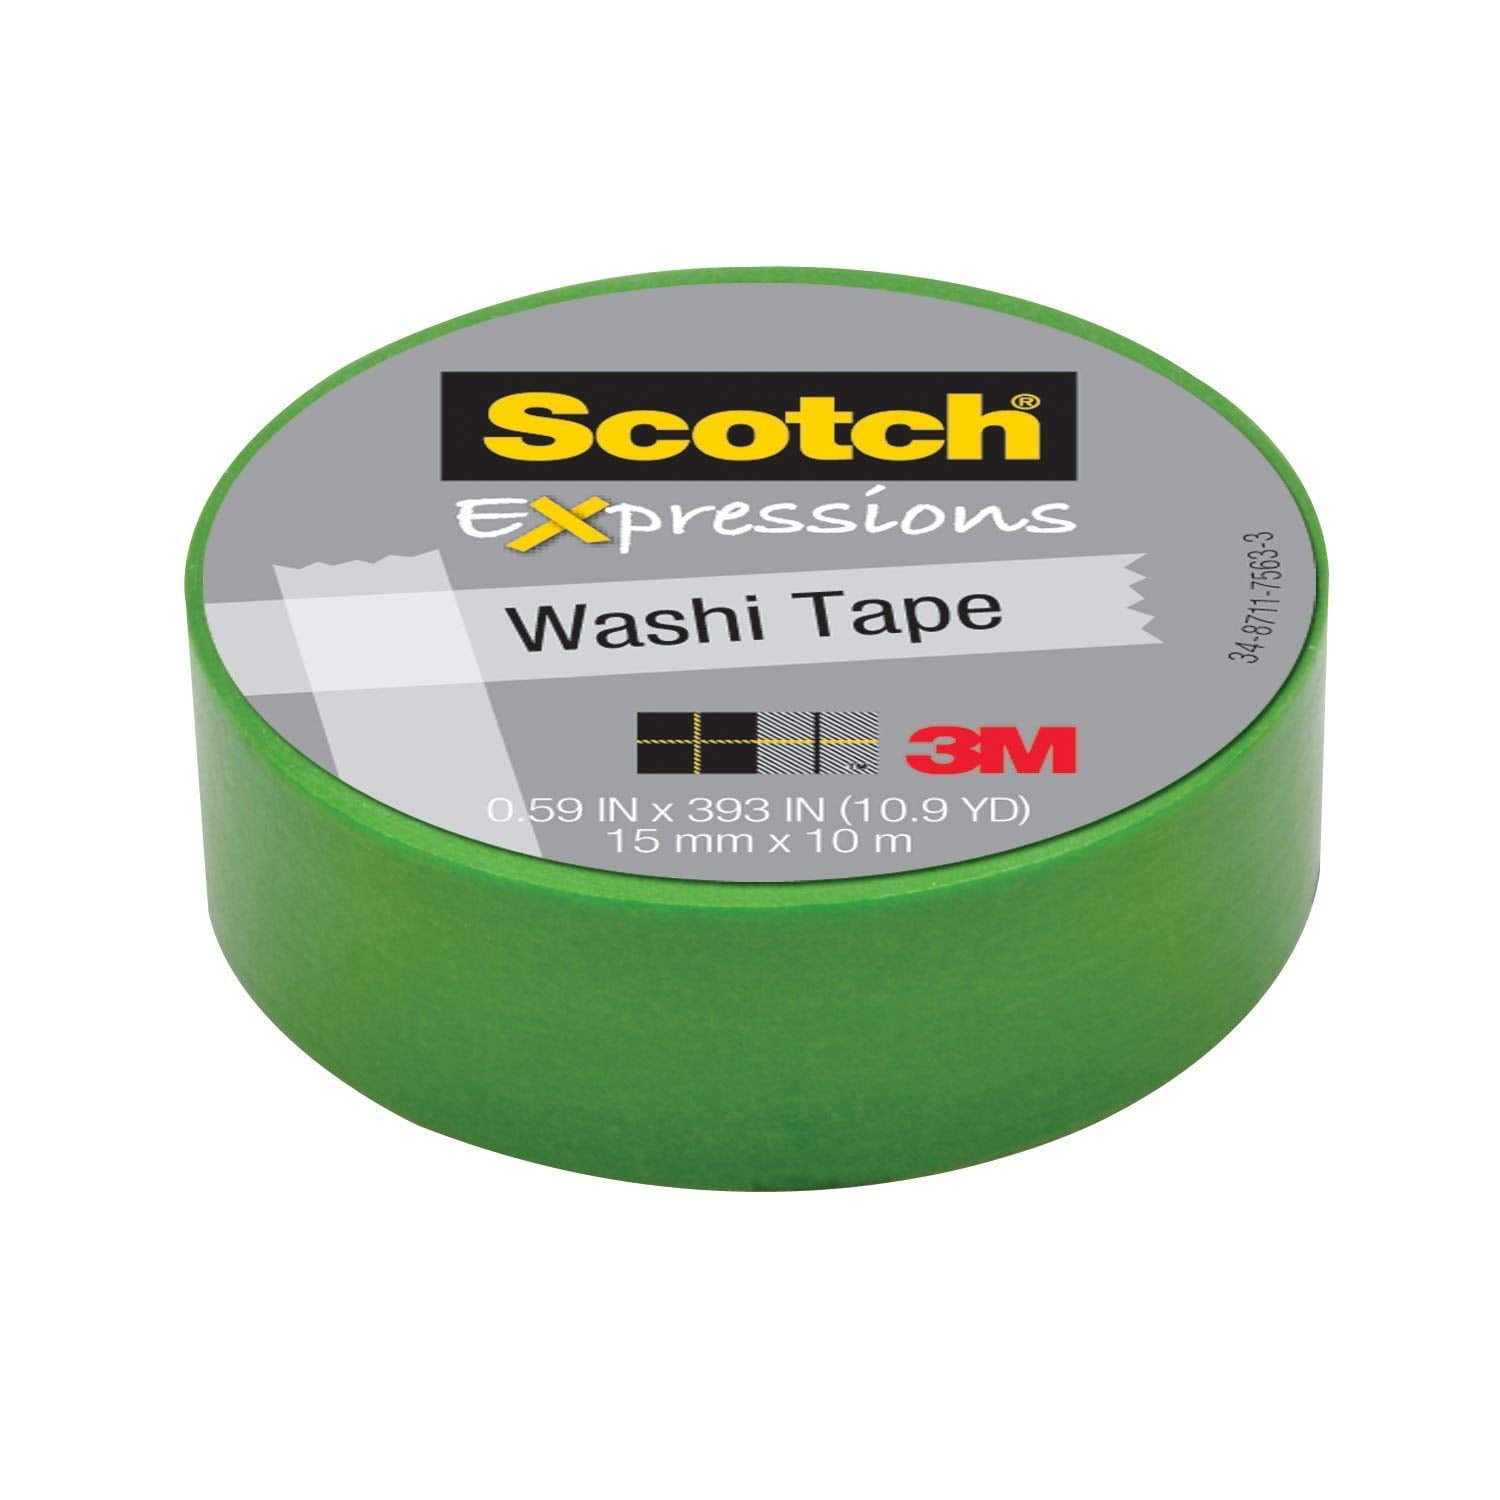 Scotch Expressions 0.59x393 Green Washi Tape